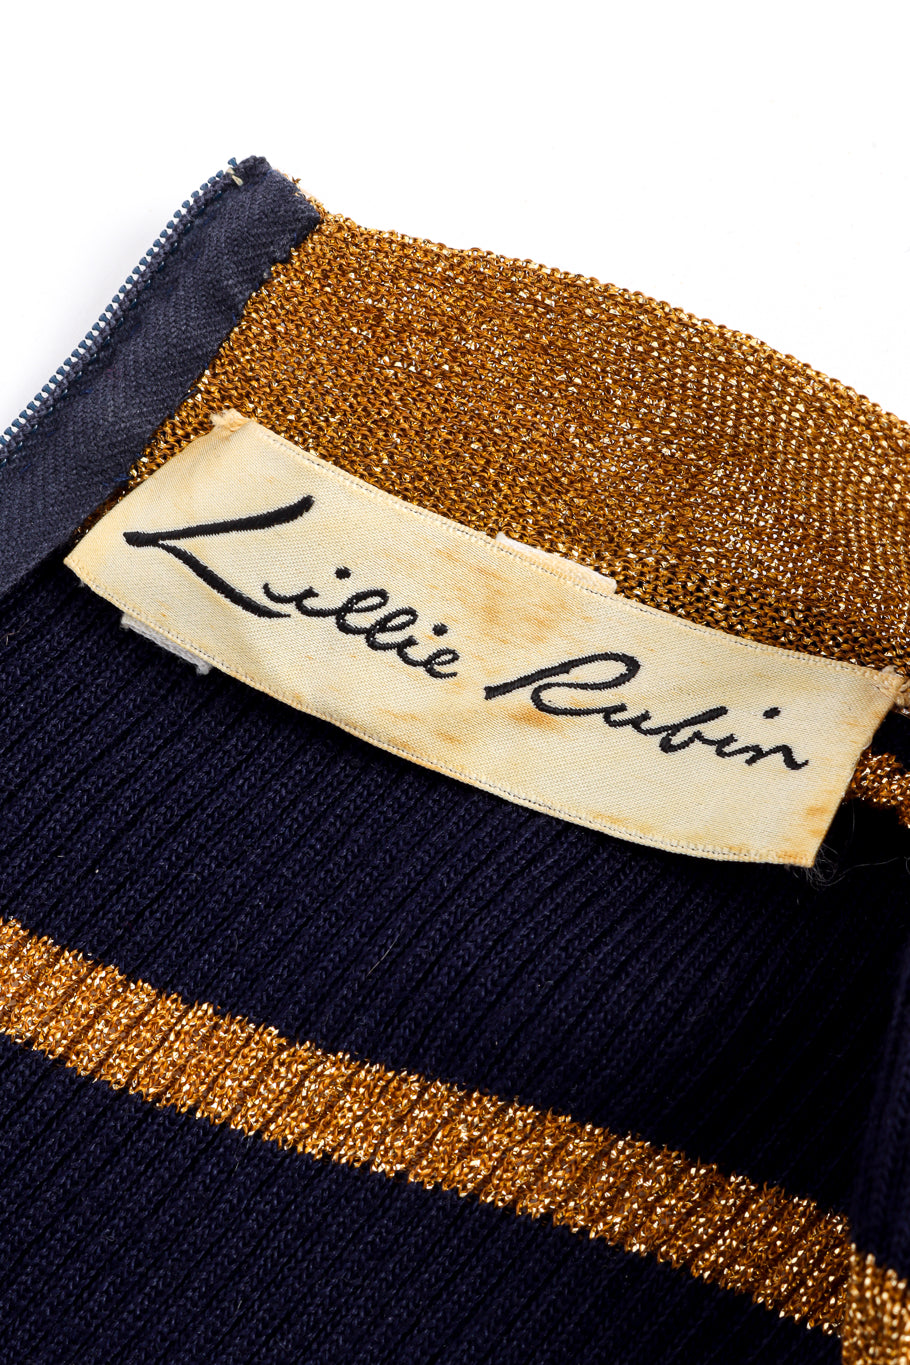 Vintage Lillie Rubin Metallic Stripe Knit Dress signature label closeup @recess la